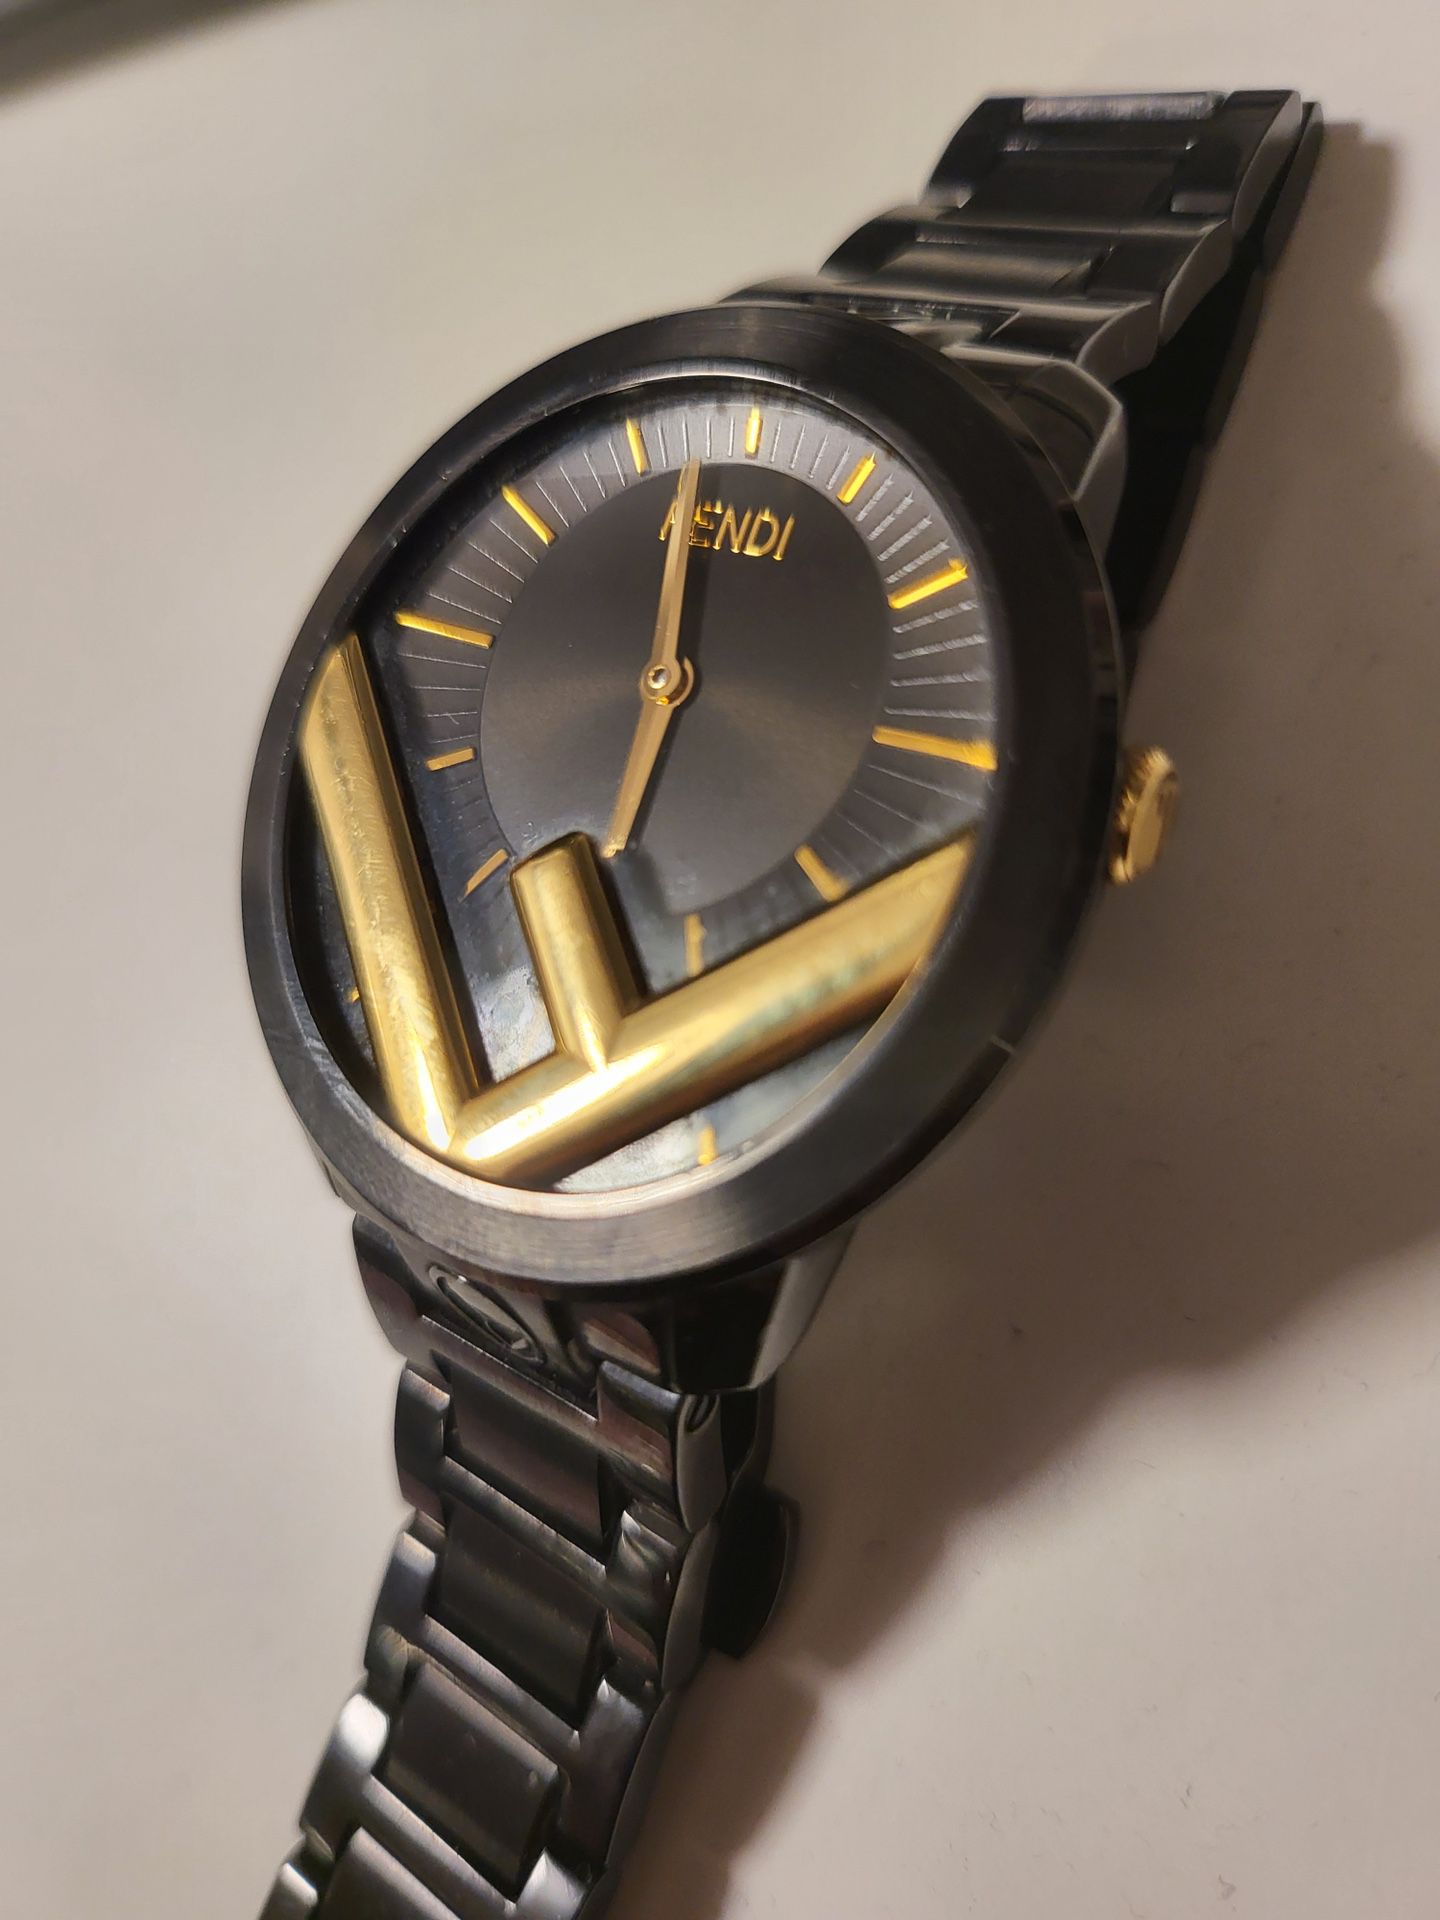 Fendi Watch Used Original $450 Paid $1900